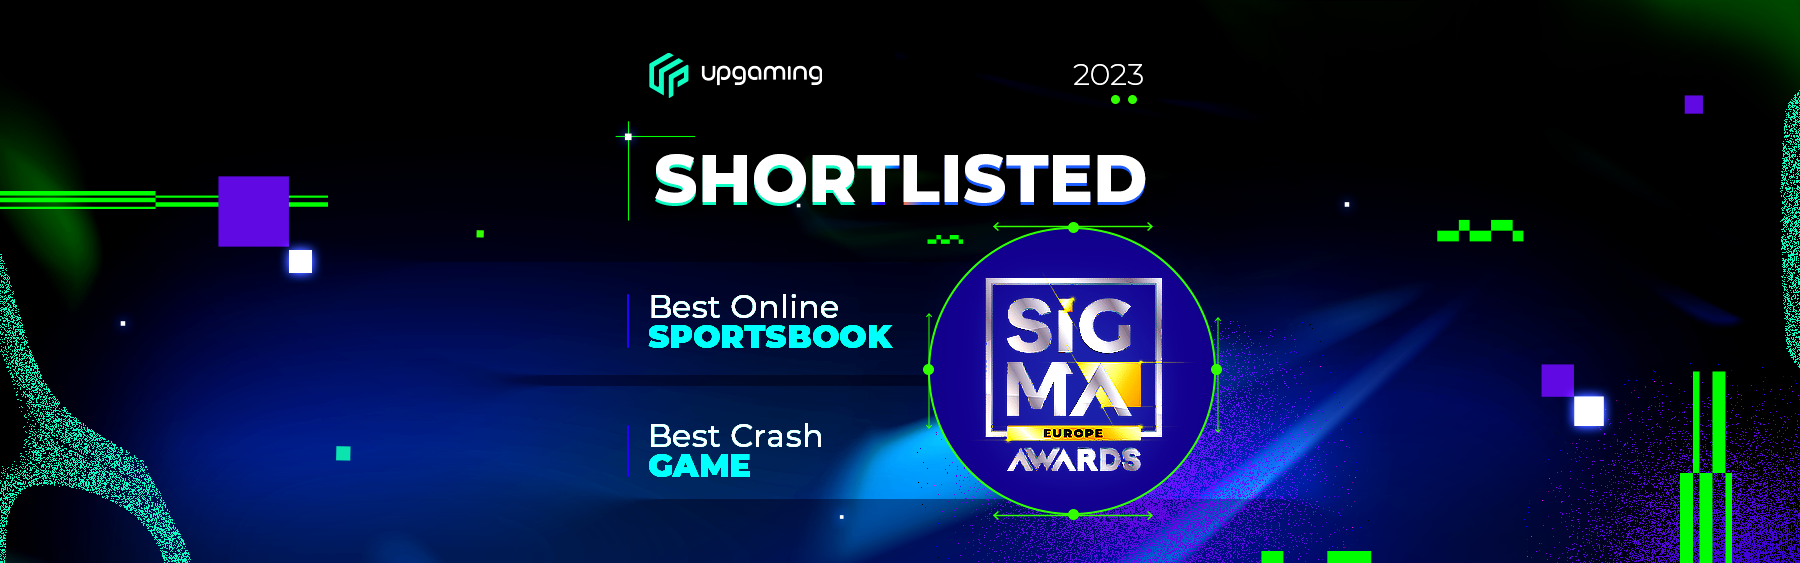 Upgaming shortlisted at SiGMA Europe Awards 2023